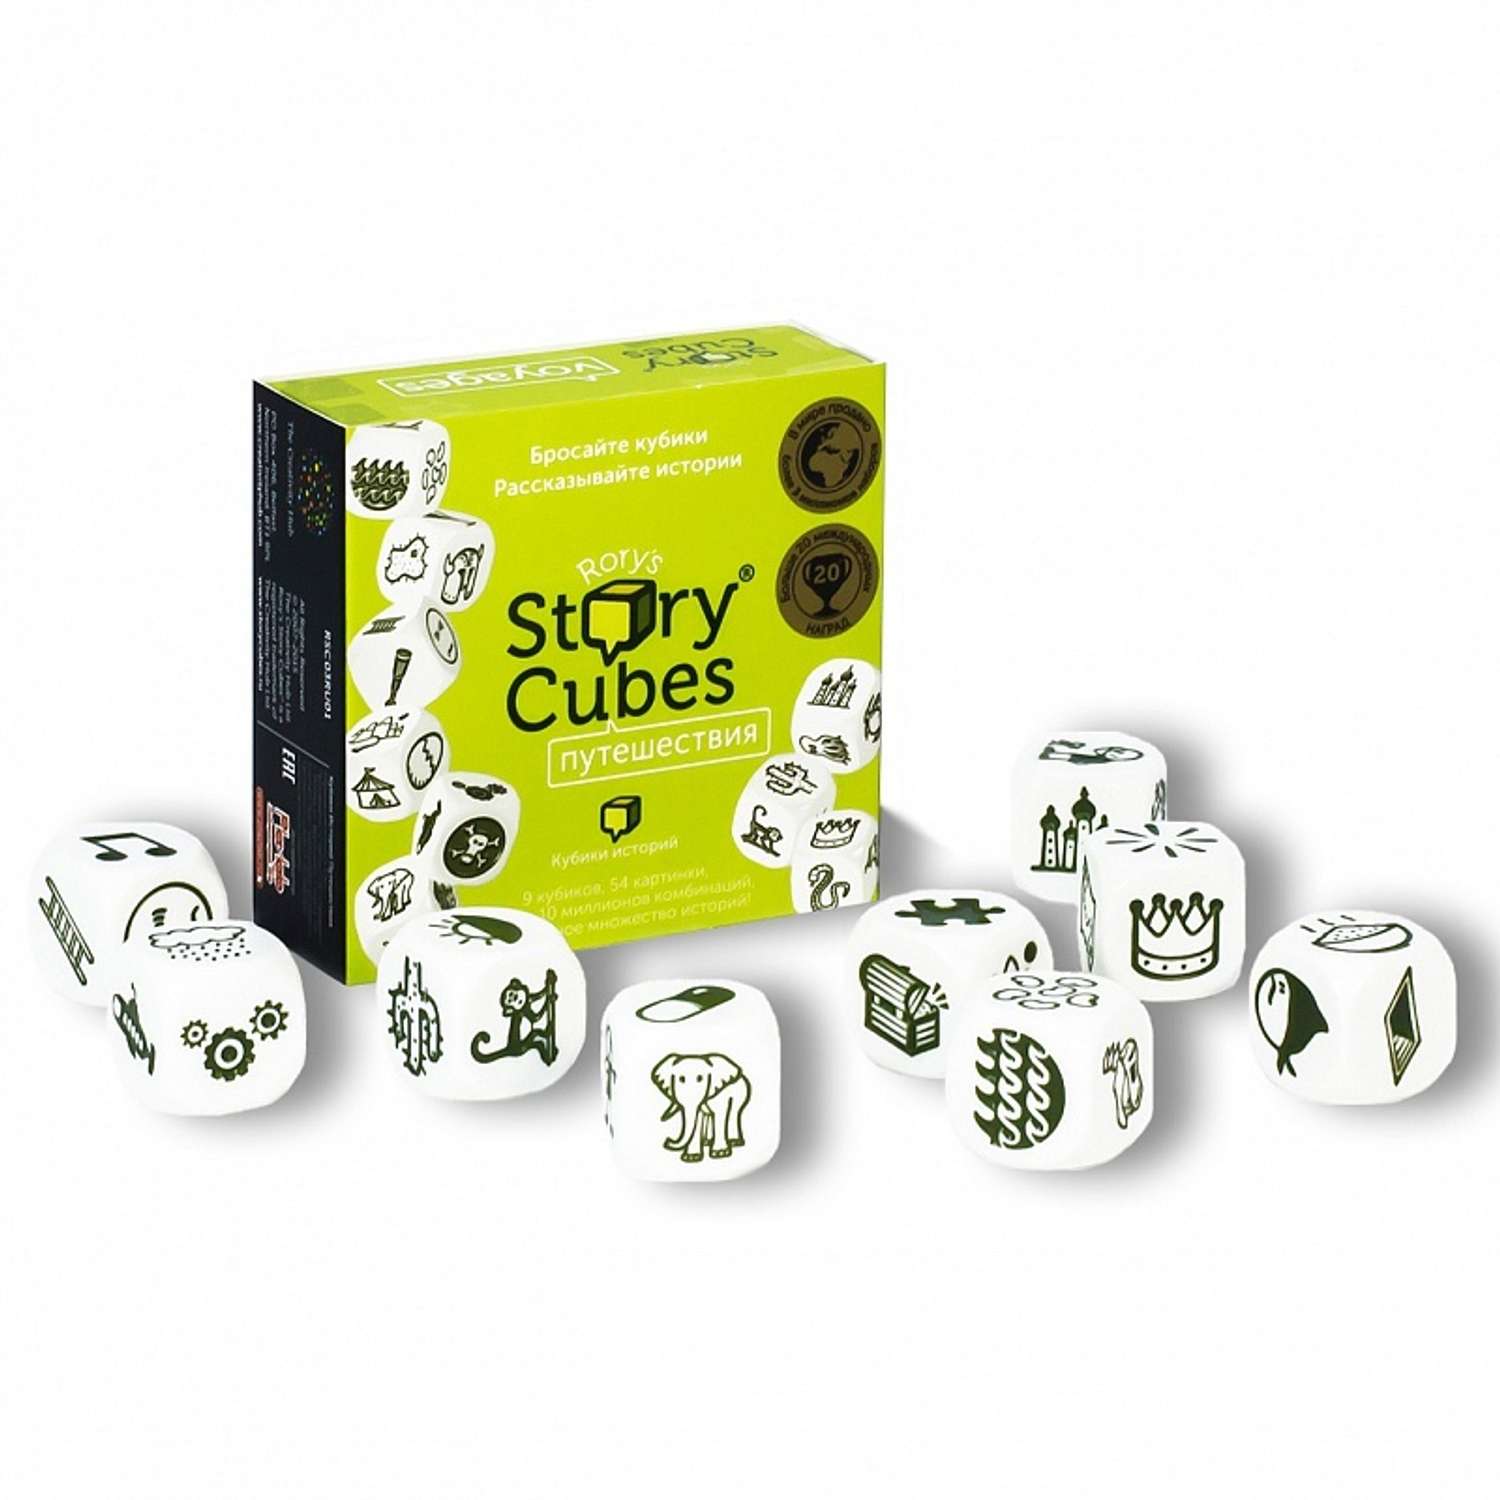 Кубики Rory`s Story Cubes Истории путешествия 9шт RSC3 - фото 1